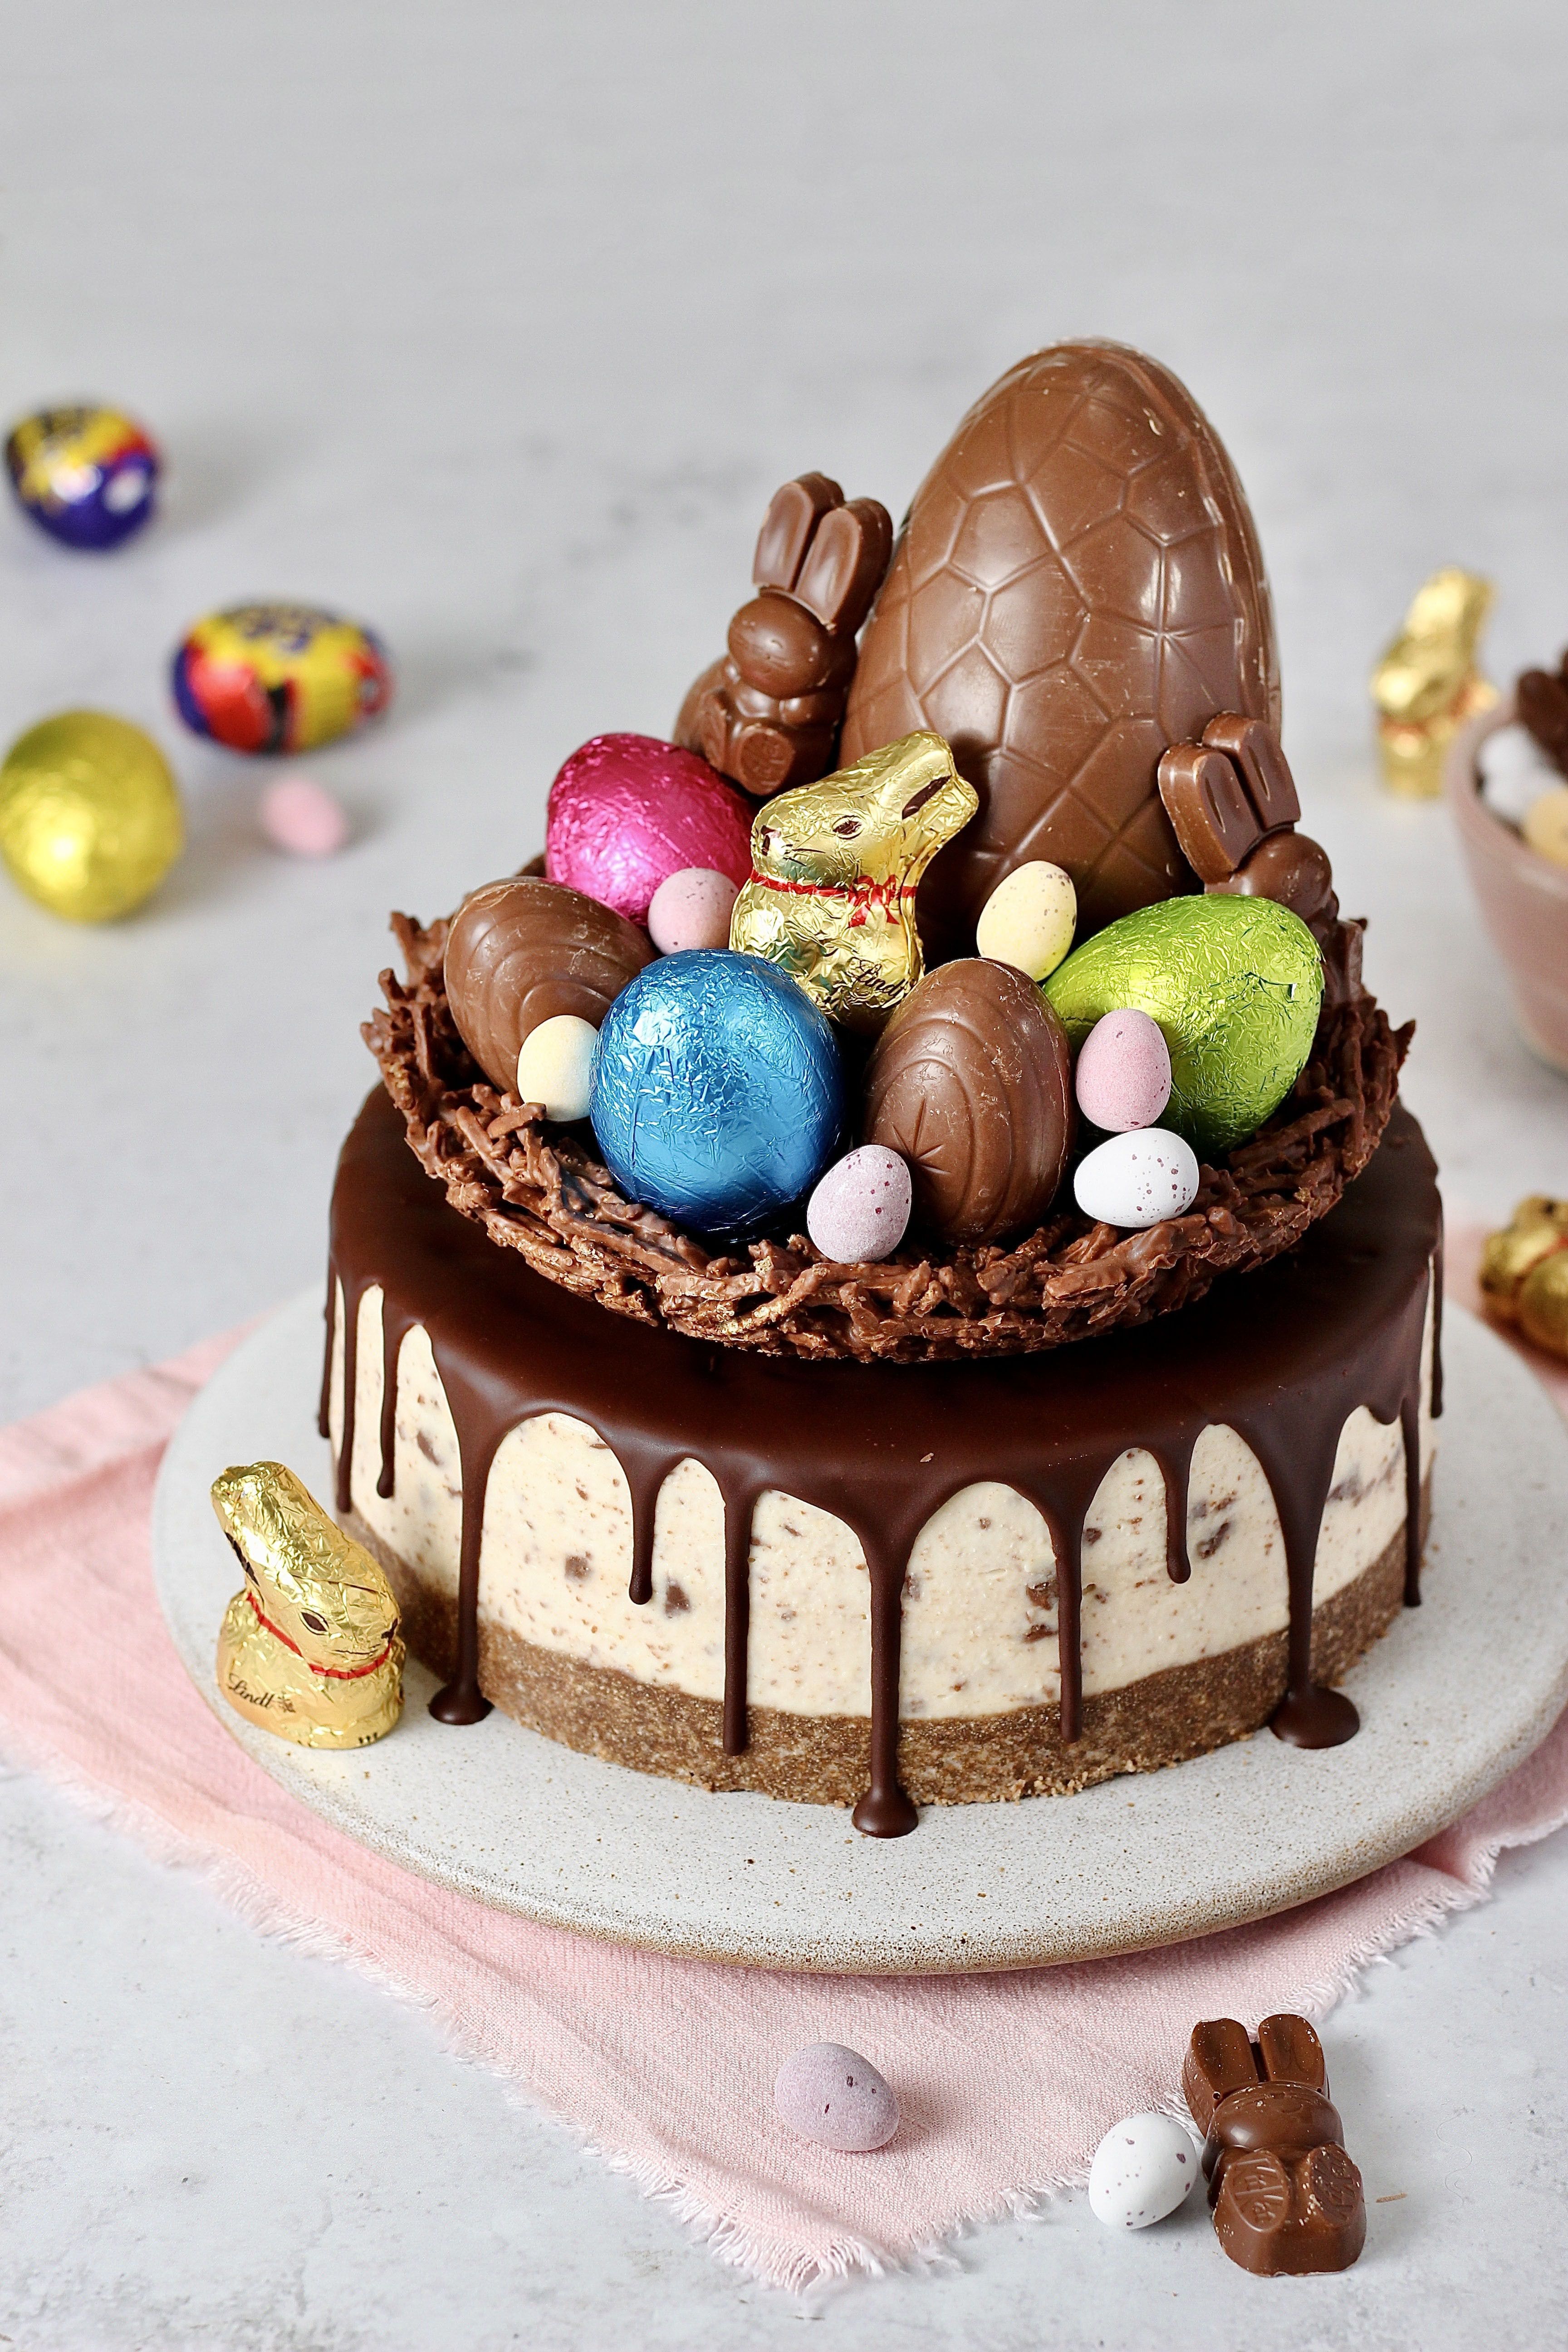 Gluten-free Mini Egg Chocolate Loaf Cake Recipe - Easter baking!